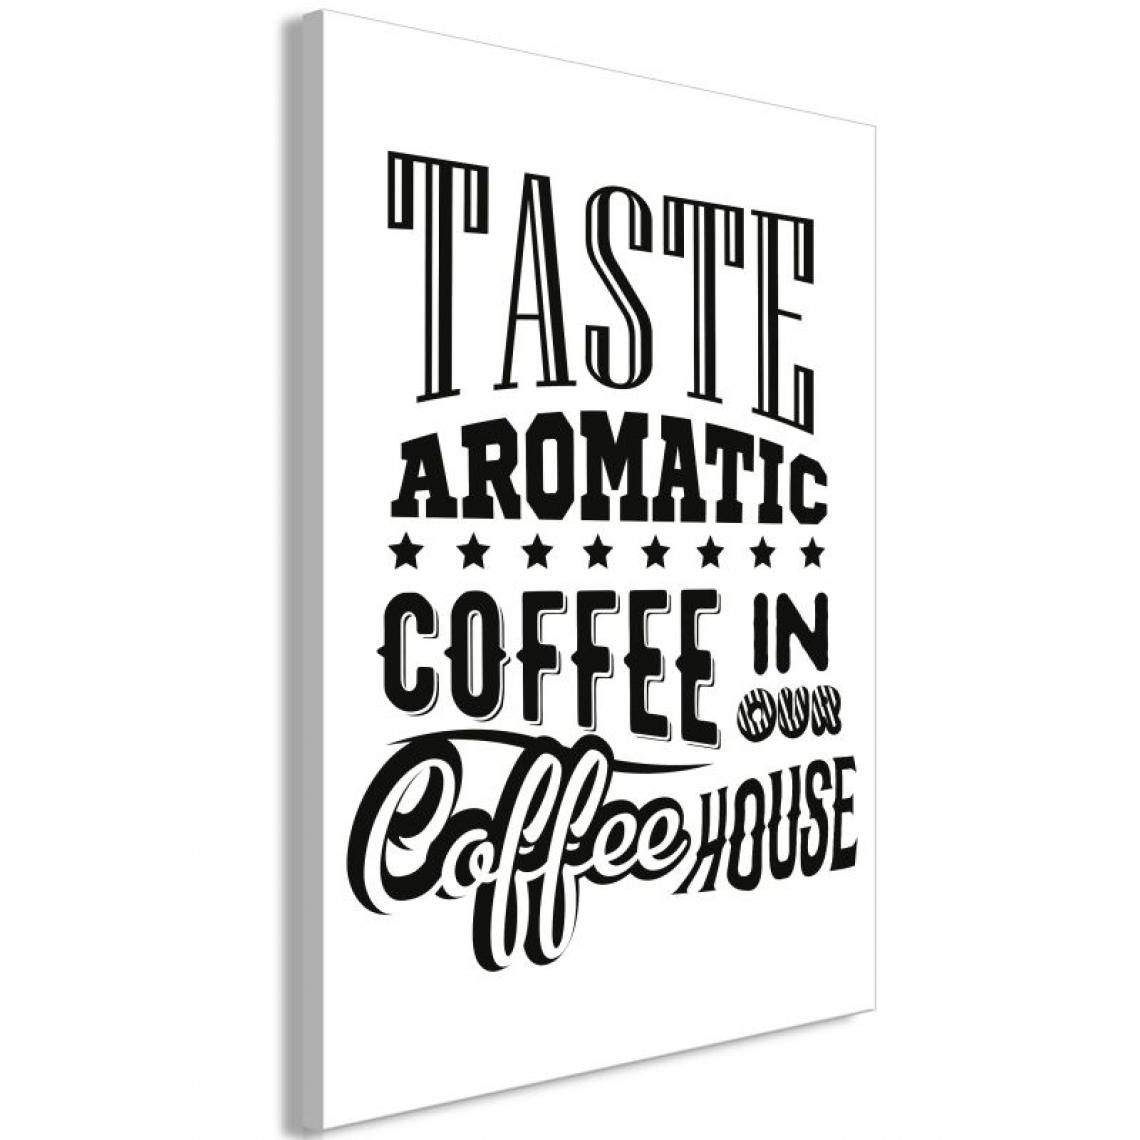 Paris Prix - Tableau Taste Aromatic Coffee in Our Coffee House 40 x 60 cm - Tableaux, peintures